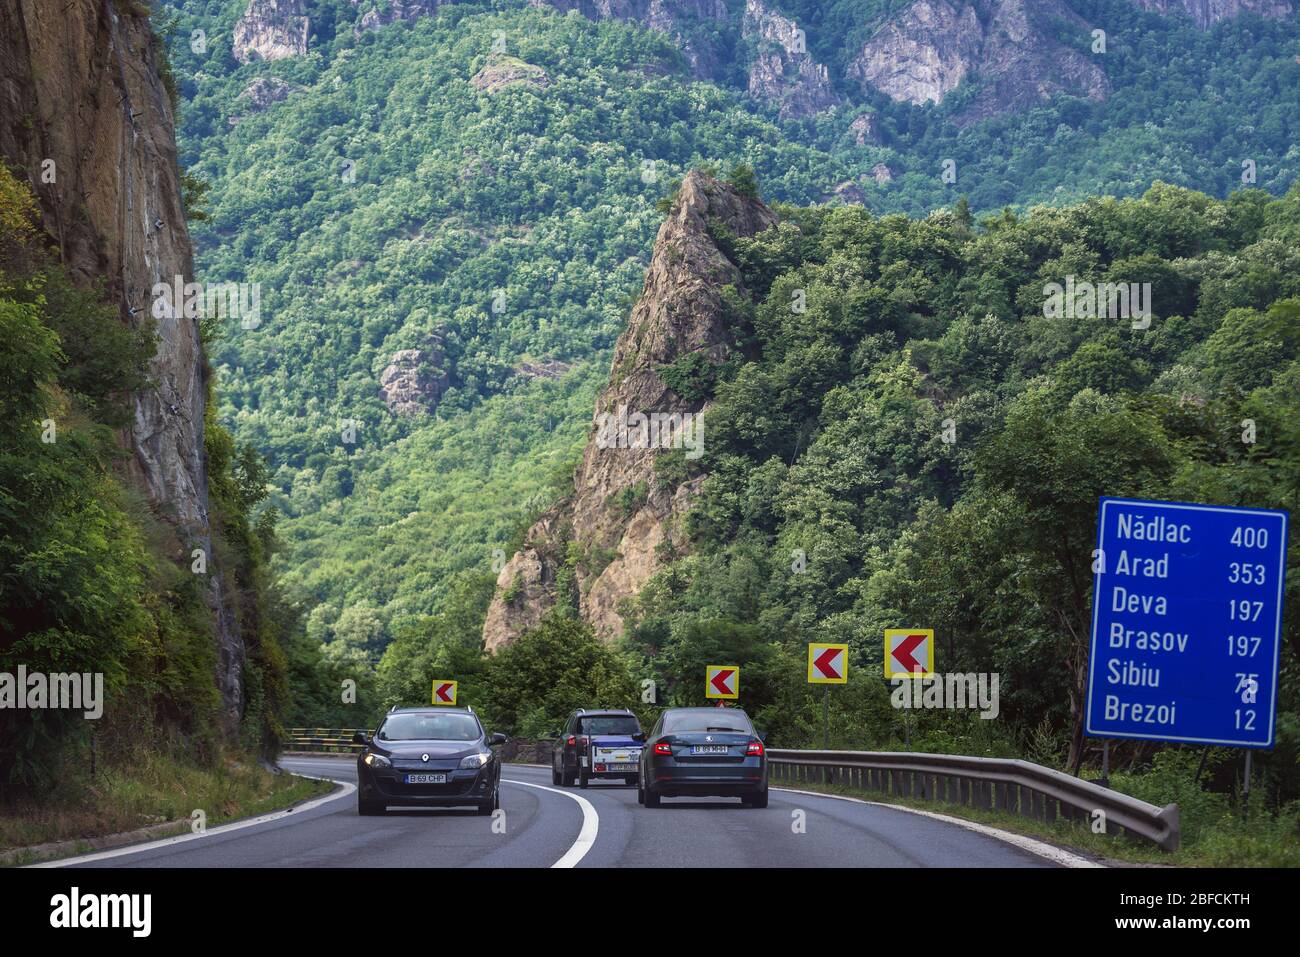 DN7 national road, part of European route E81 in Valcea County in Wallachia region of Romania Stock Photo